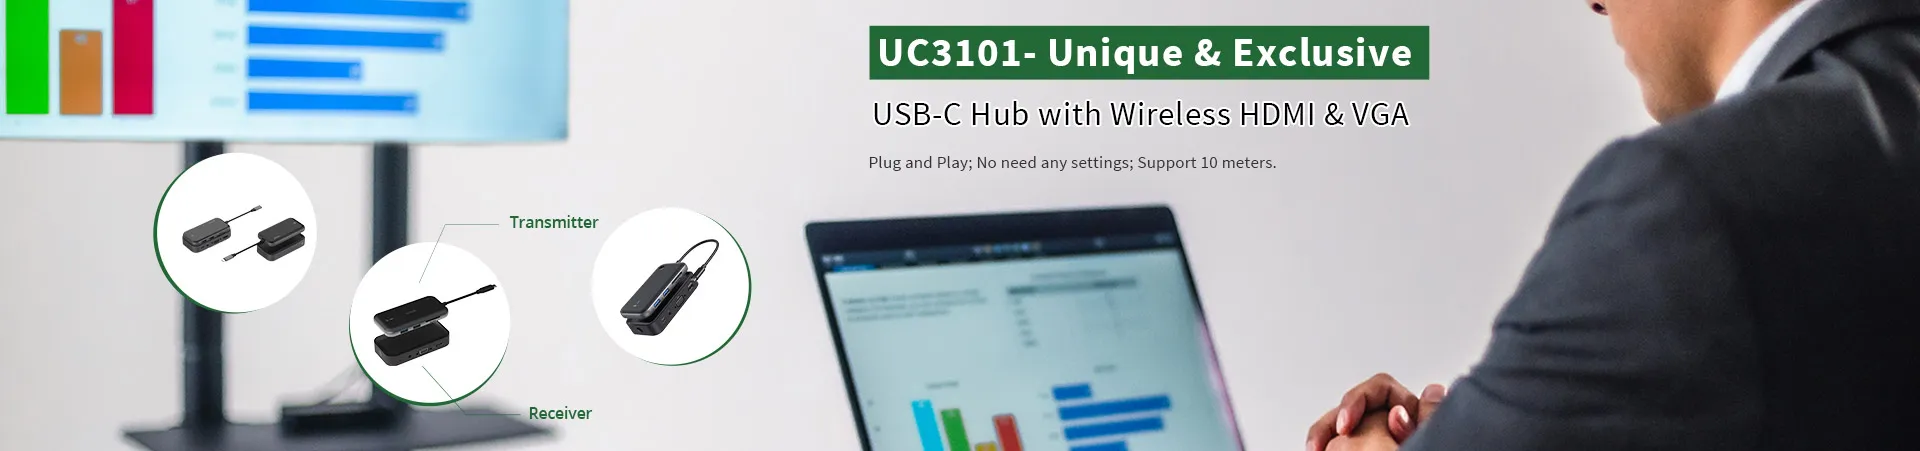 Hub USB-C UC3101 avec affichage sans fil